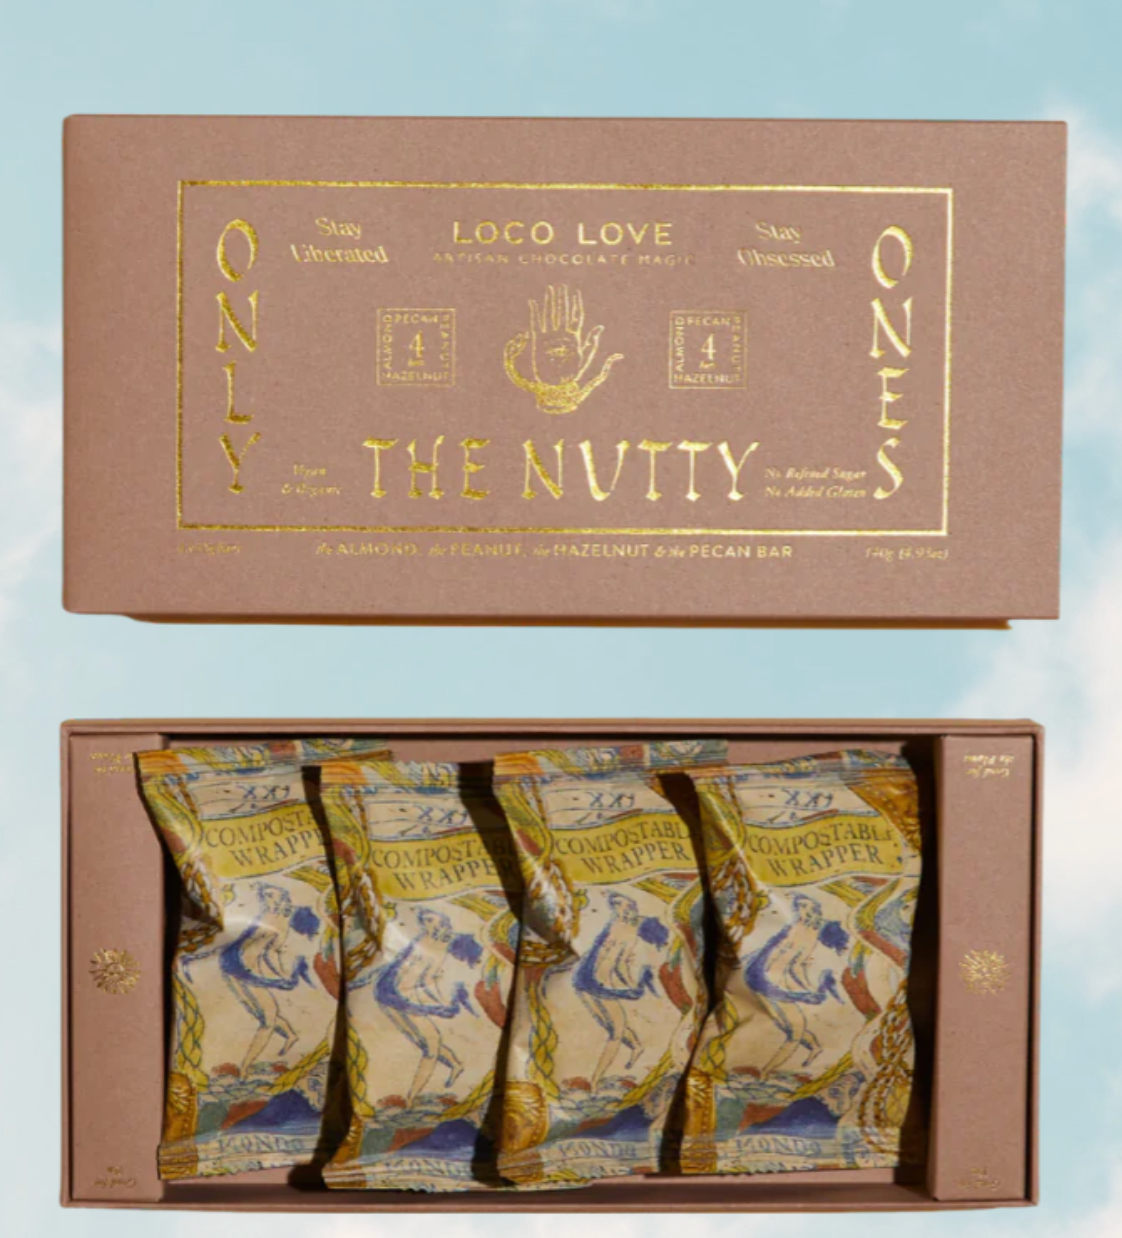 The Nutty Box, Loco Love